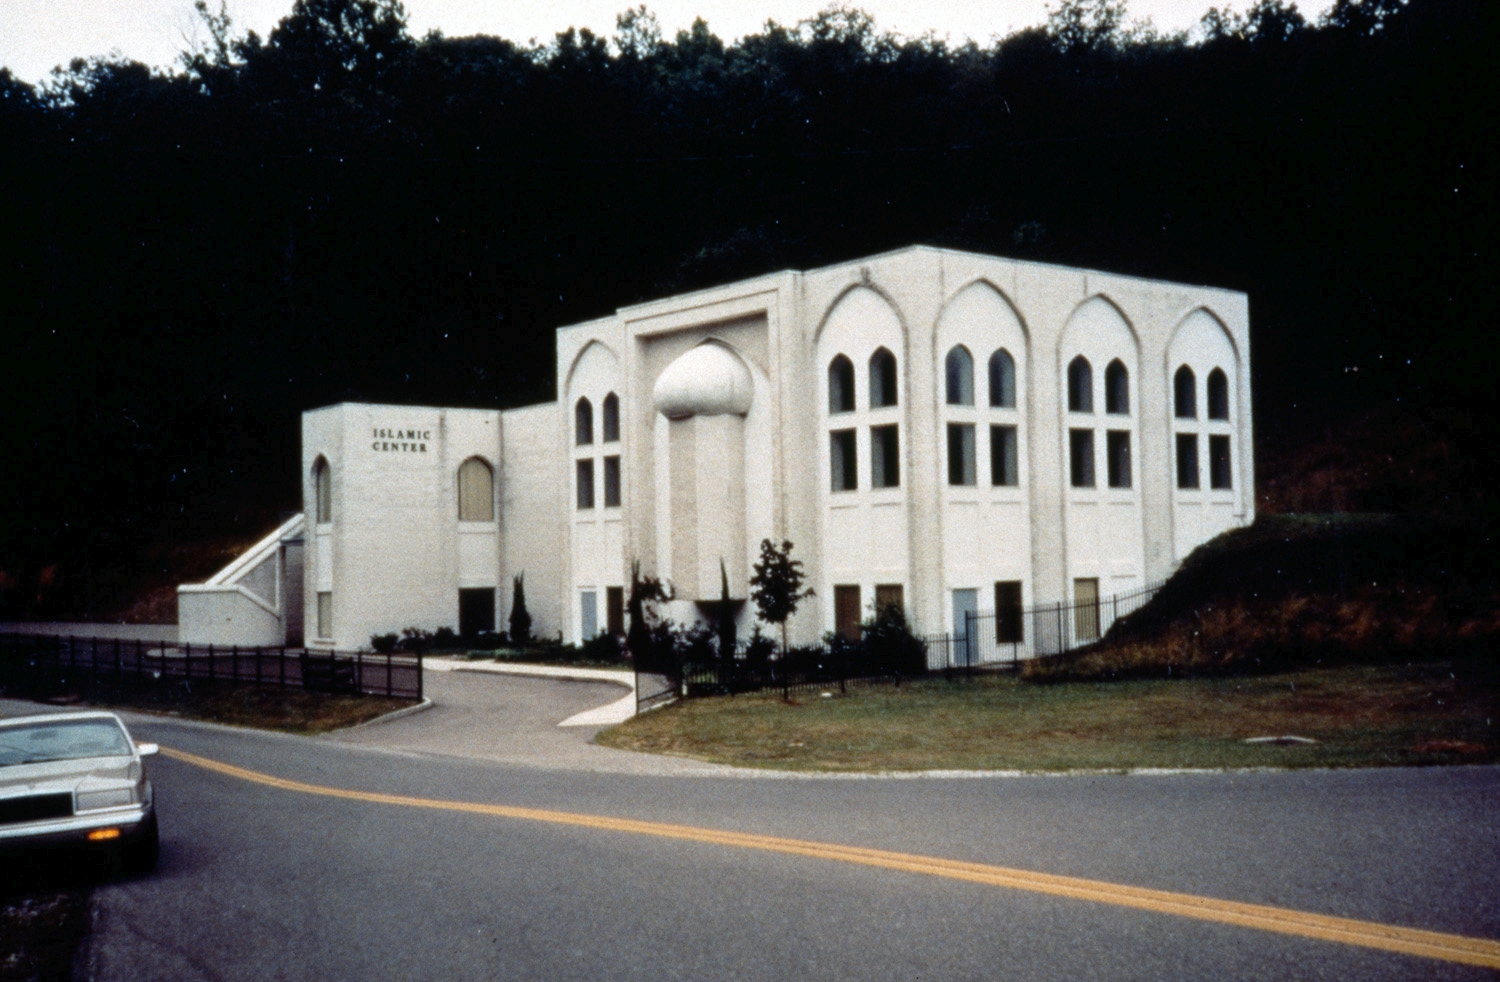 Islamic Center of West Virginia